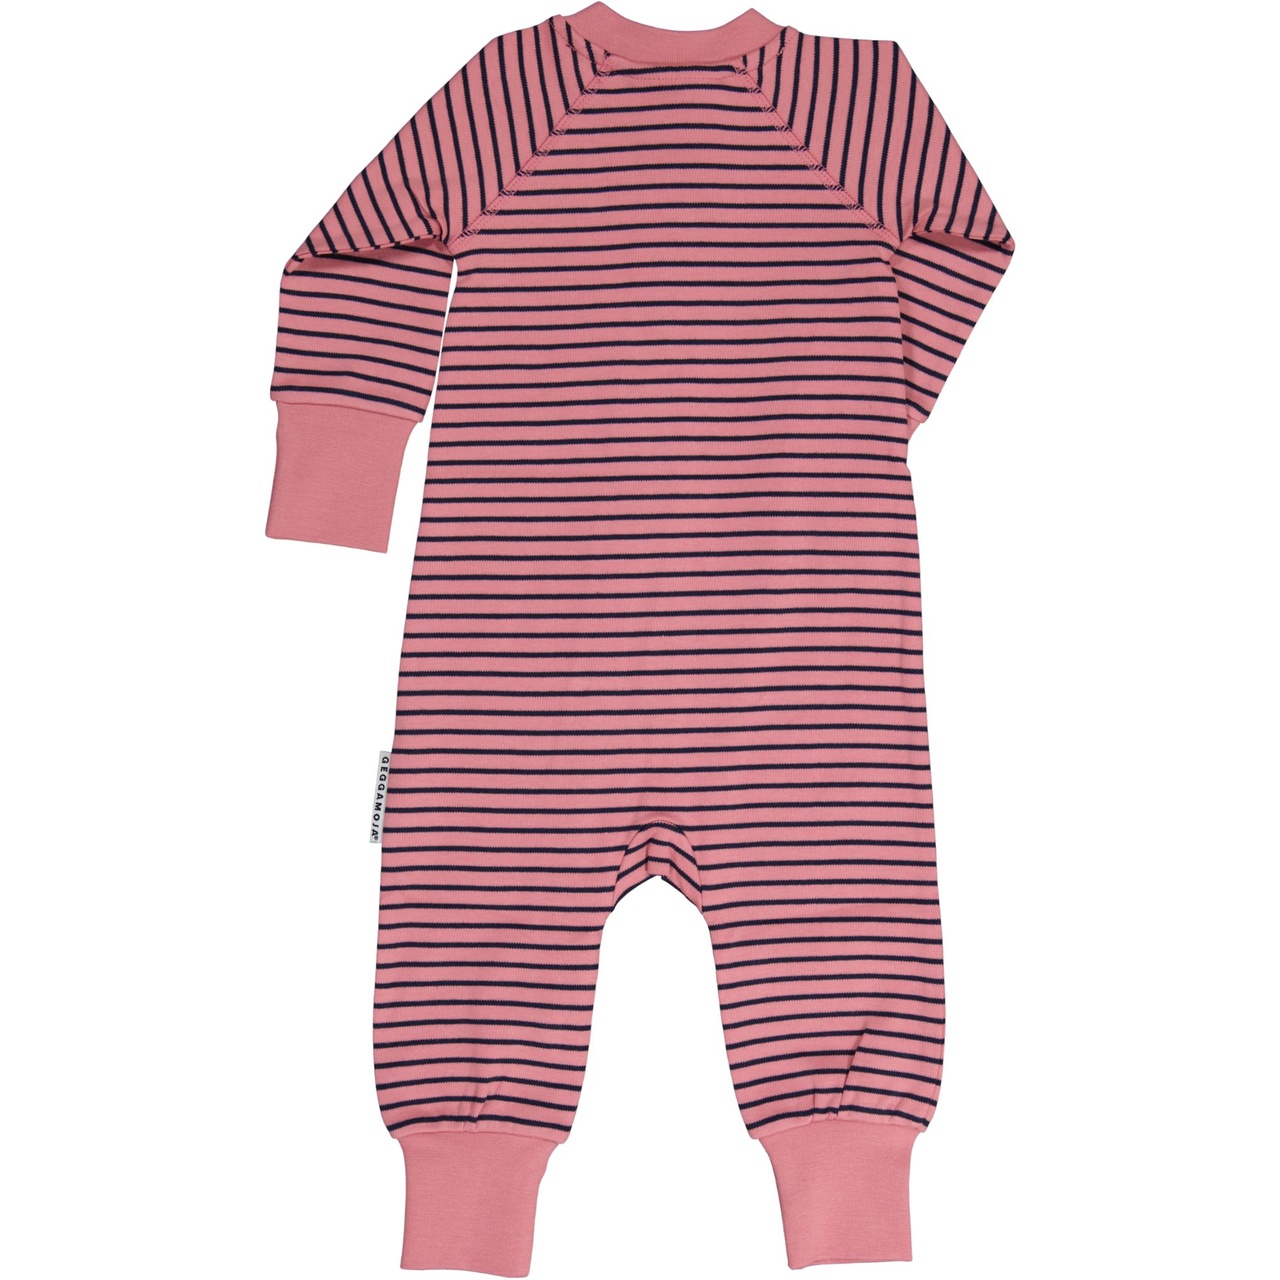 Pyjamas Two way zipper Pink/navy 74/80